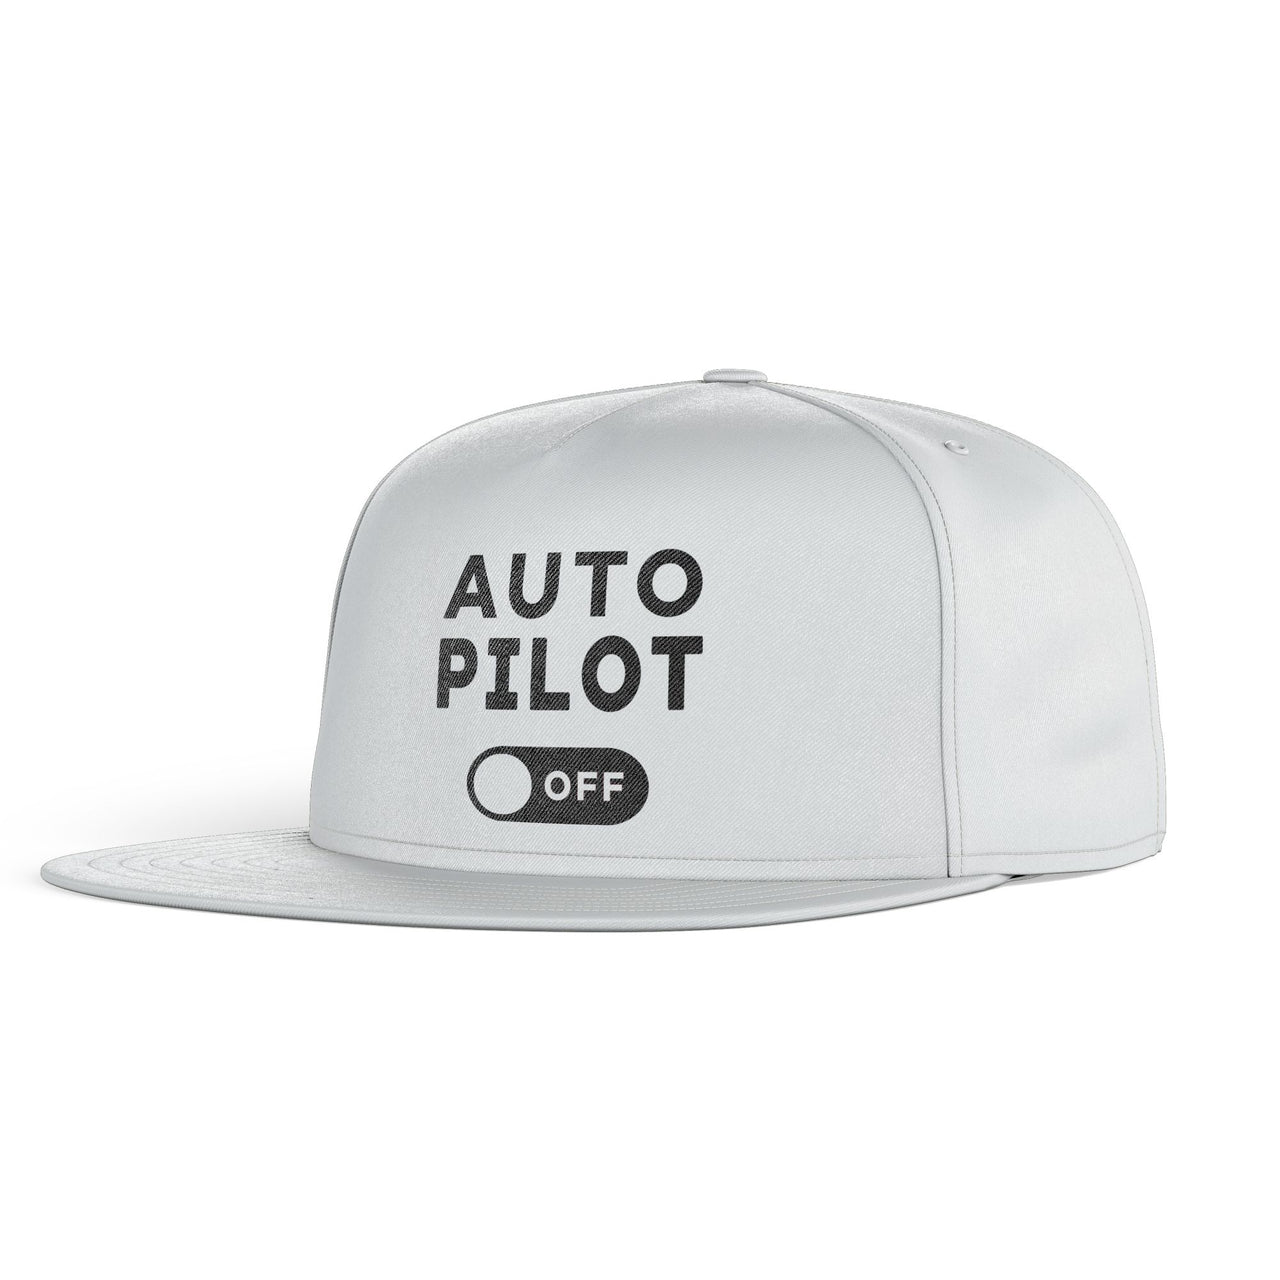 Auto Pilot Off Designed Snapback Caps & Hats